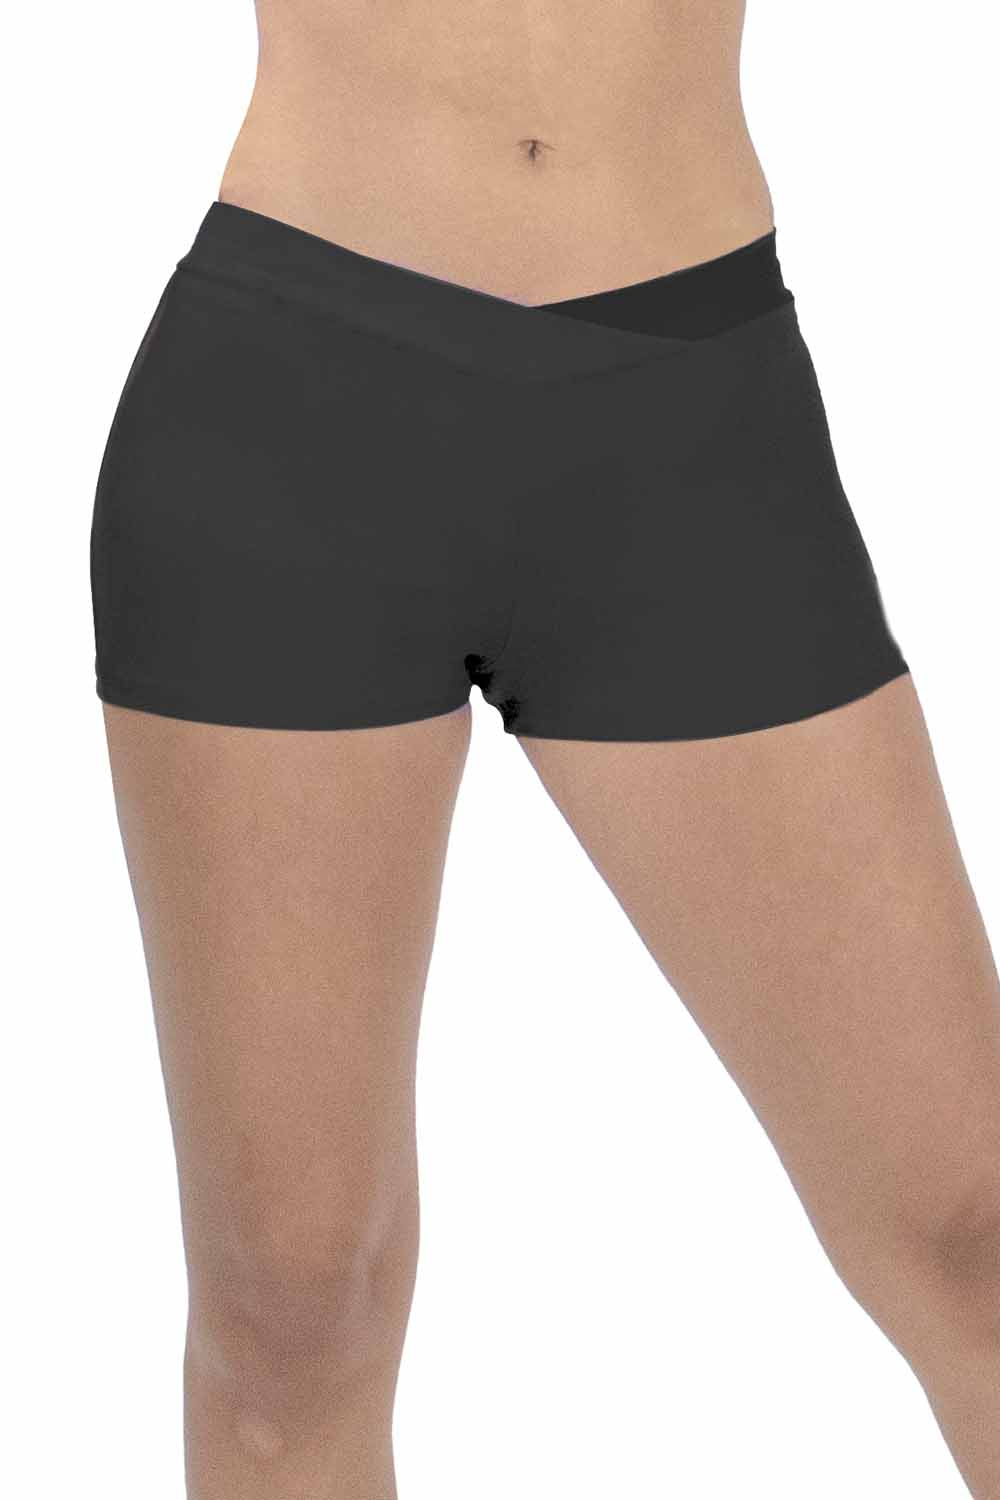 Adult 1" Inseam Microfiber V-front Hot Shorts